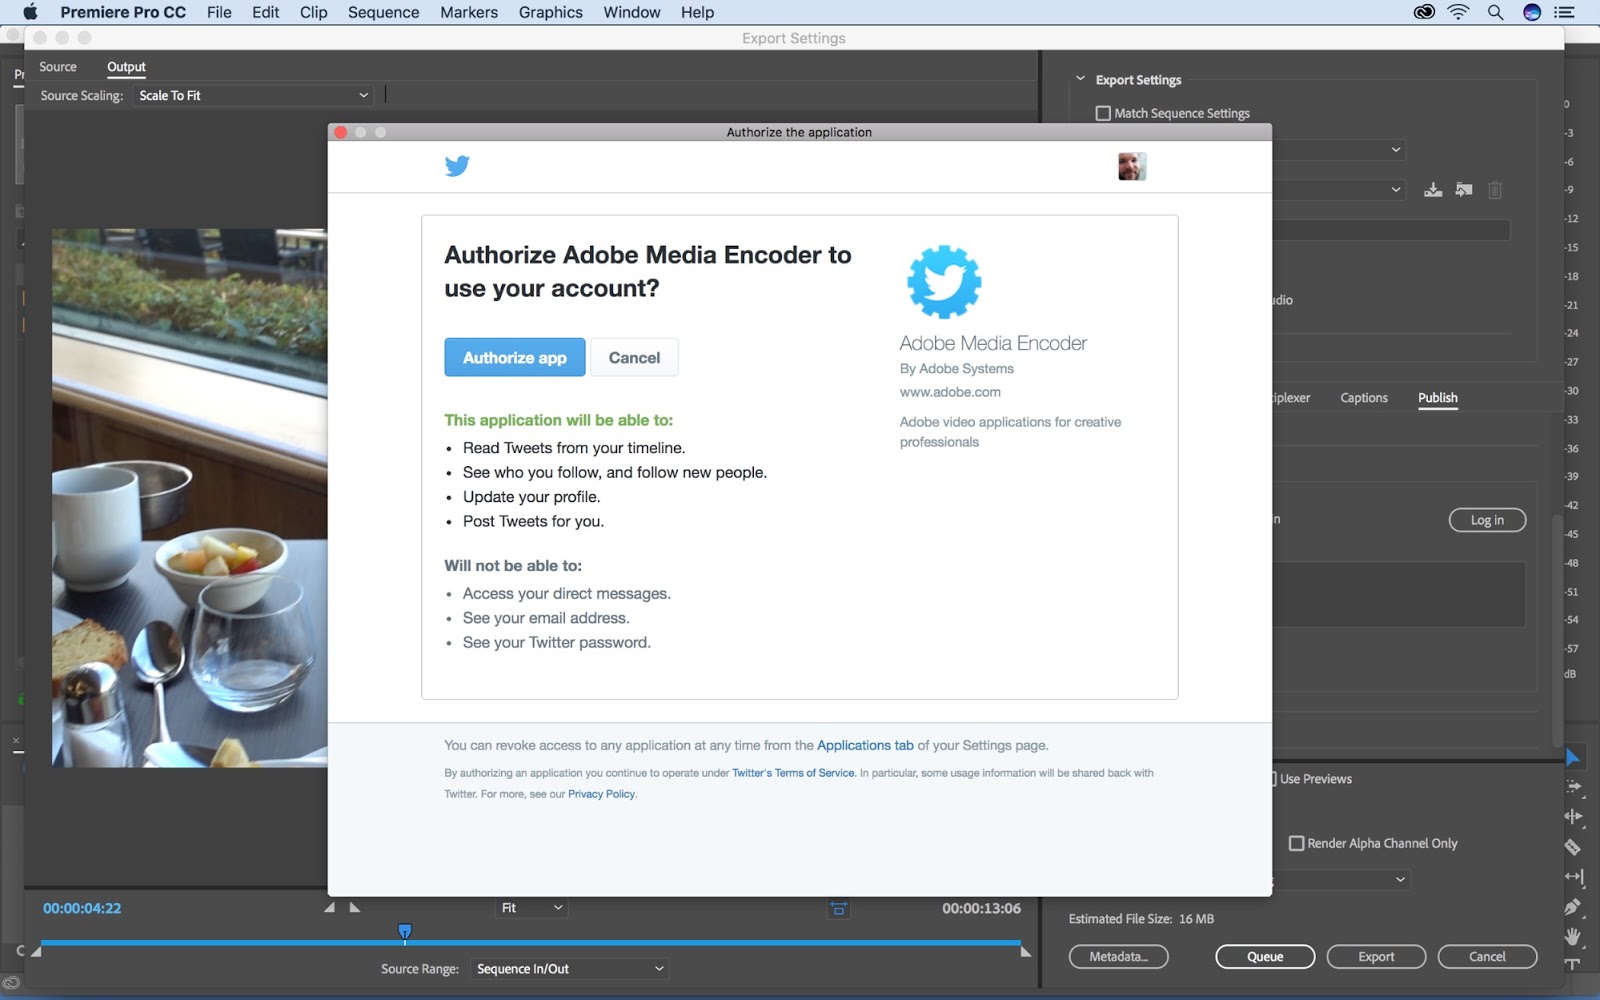 Adobe Media Encoder Twitter authorization